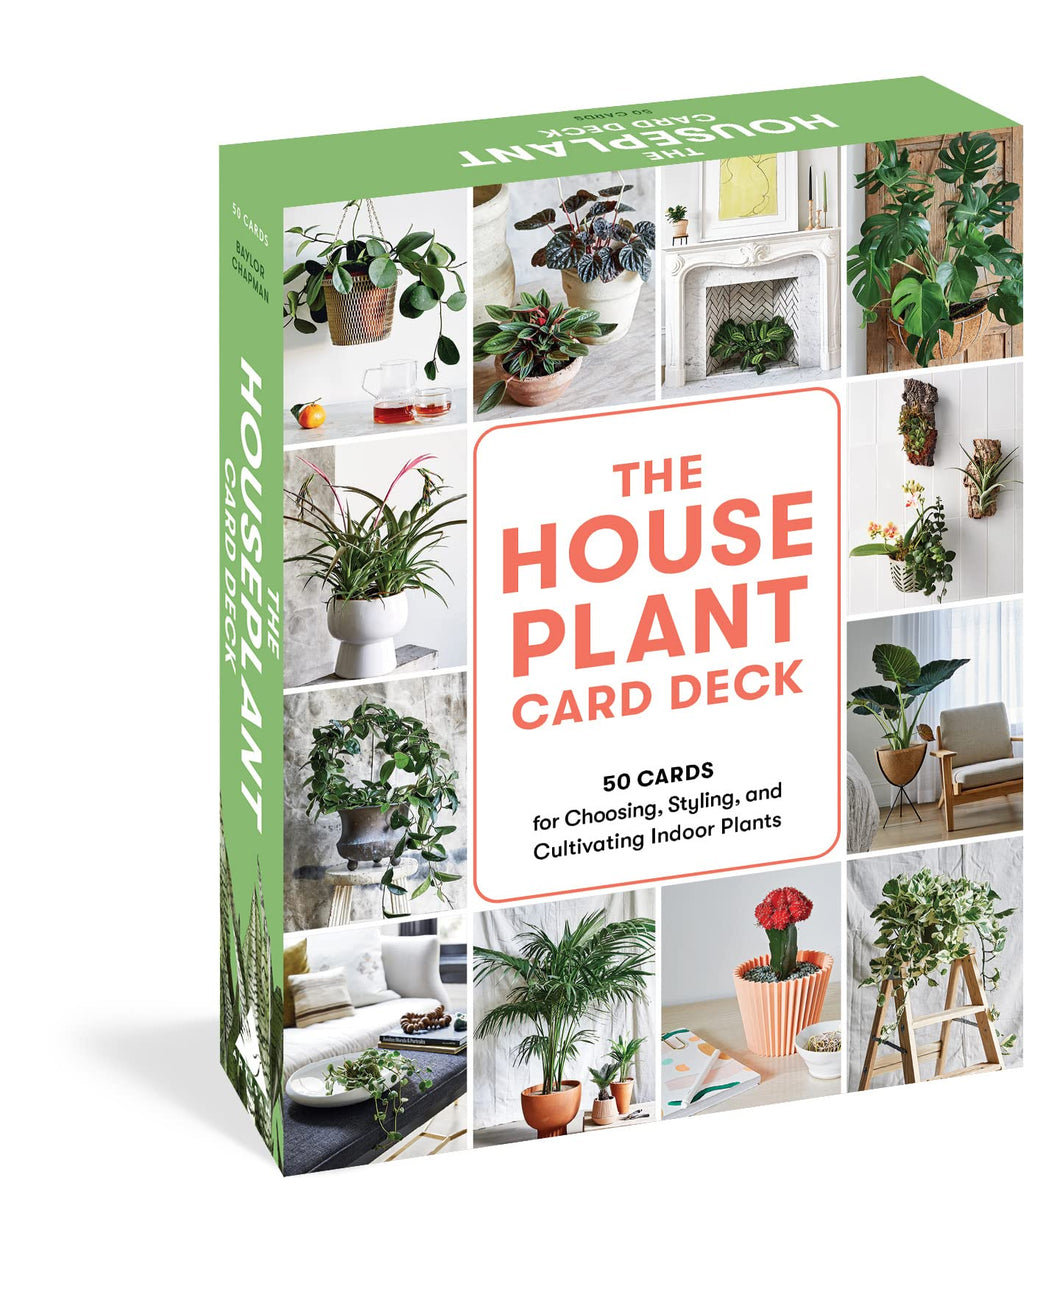 The House Plant Card Deck